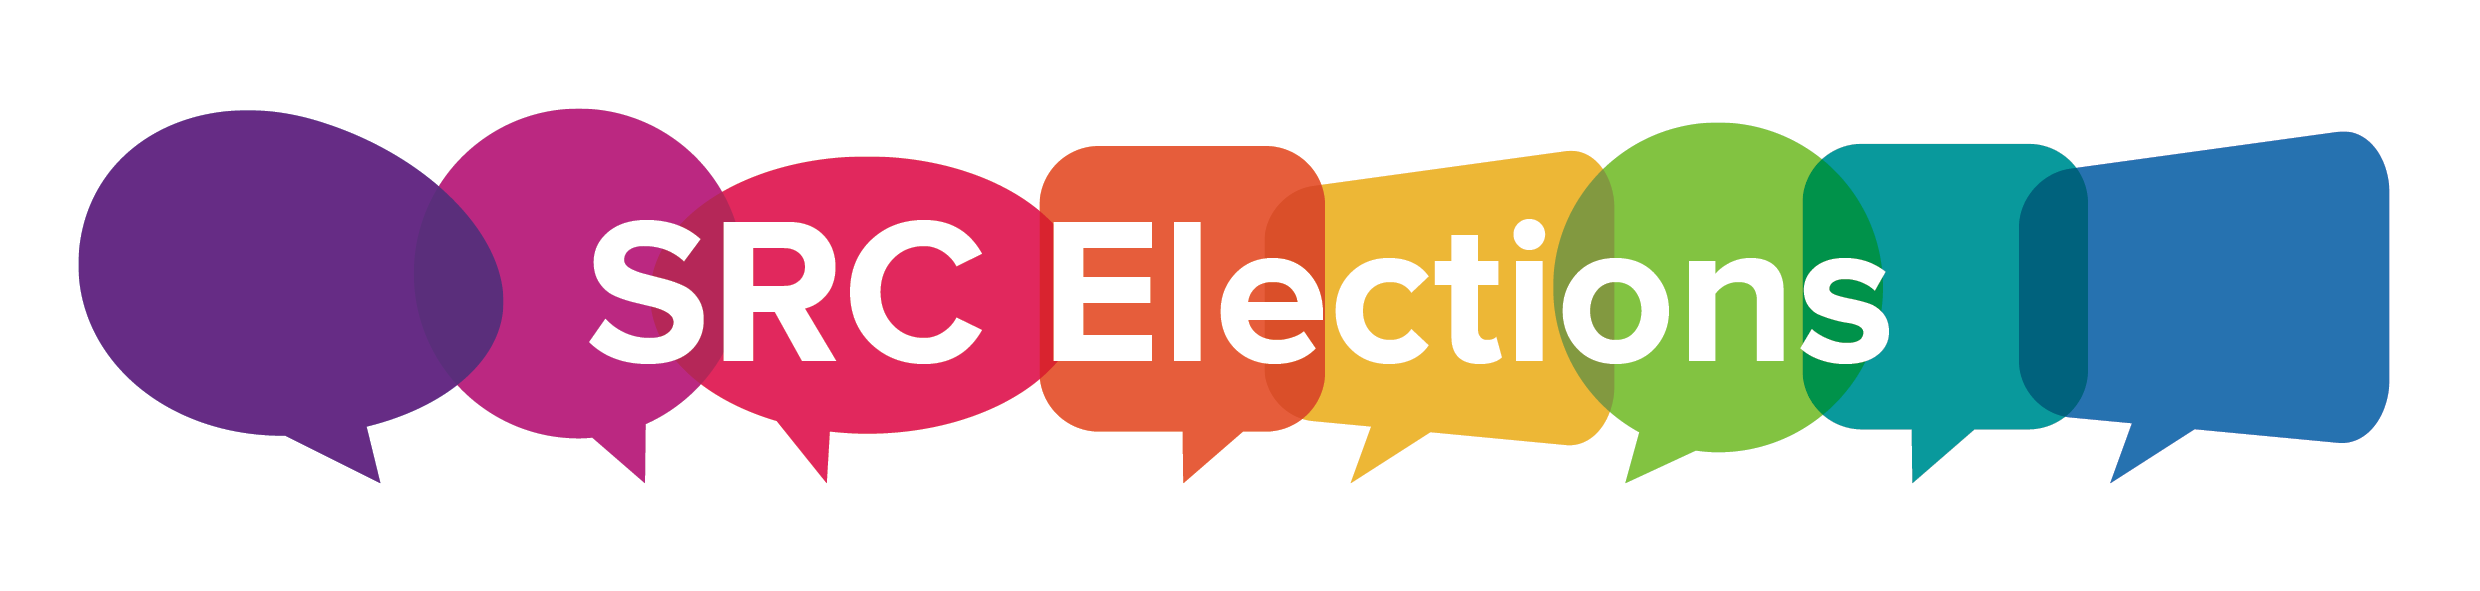 SRC ELECTIONS and multi coloured speech bubbles